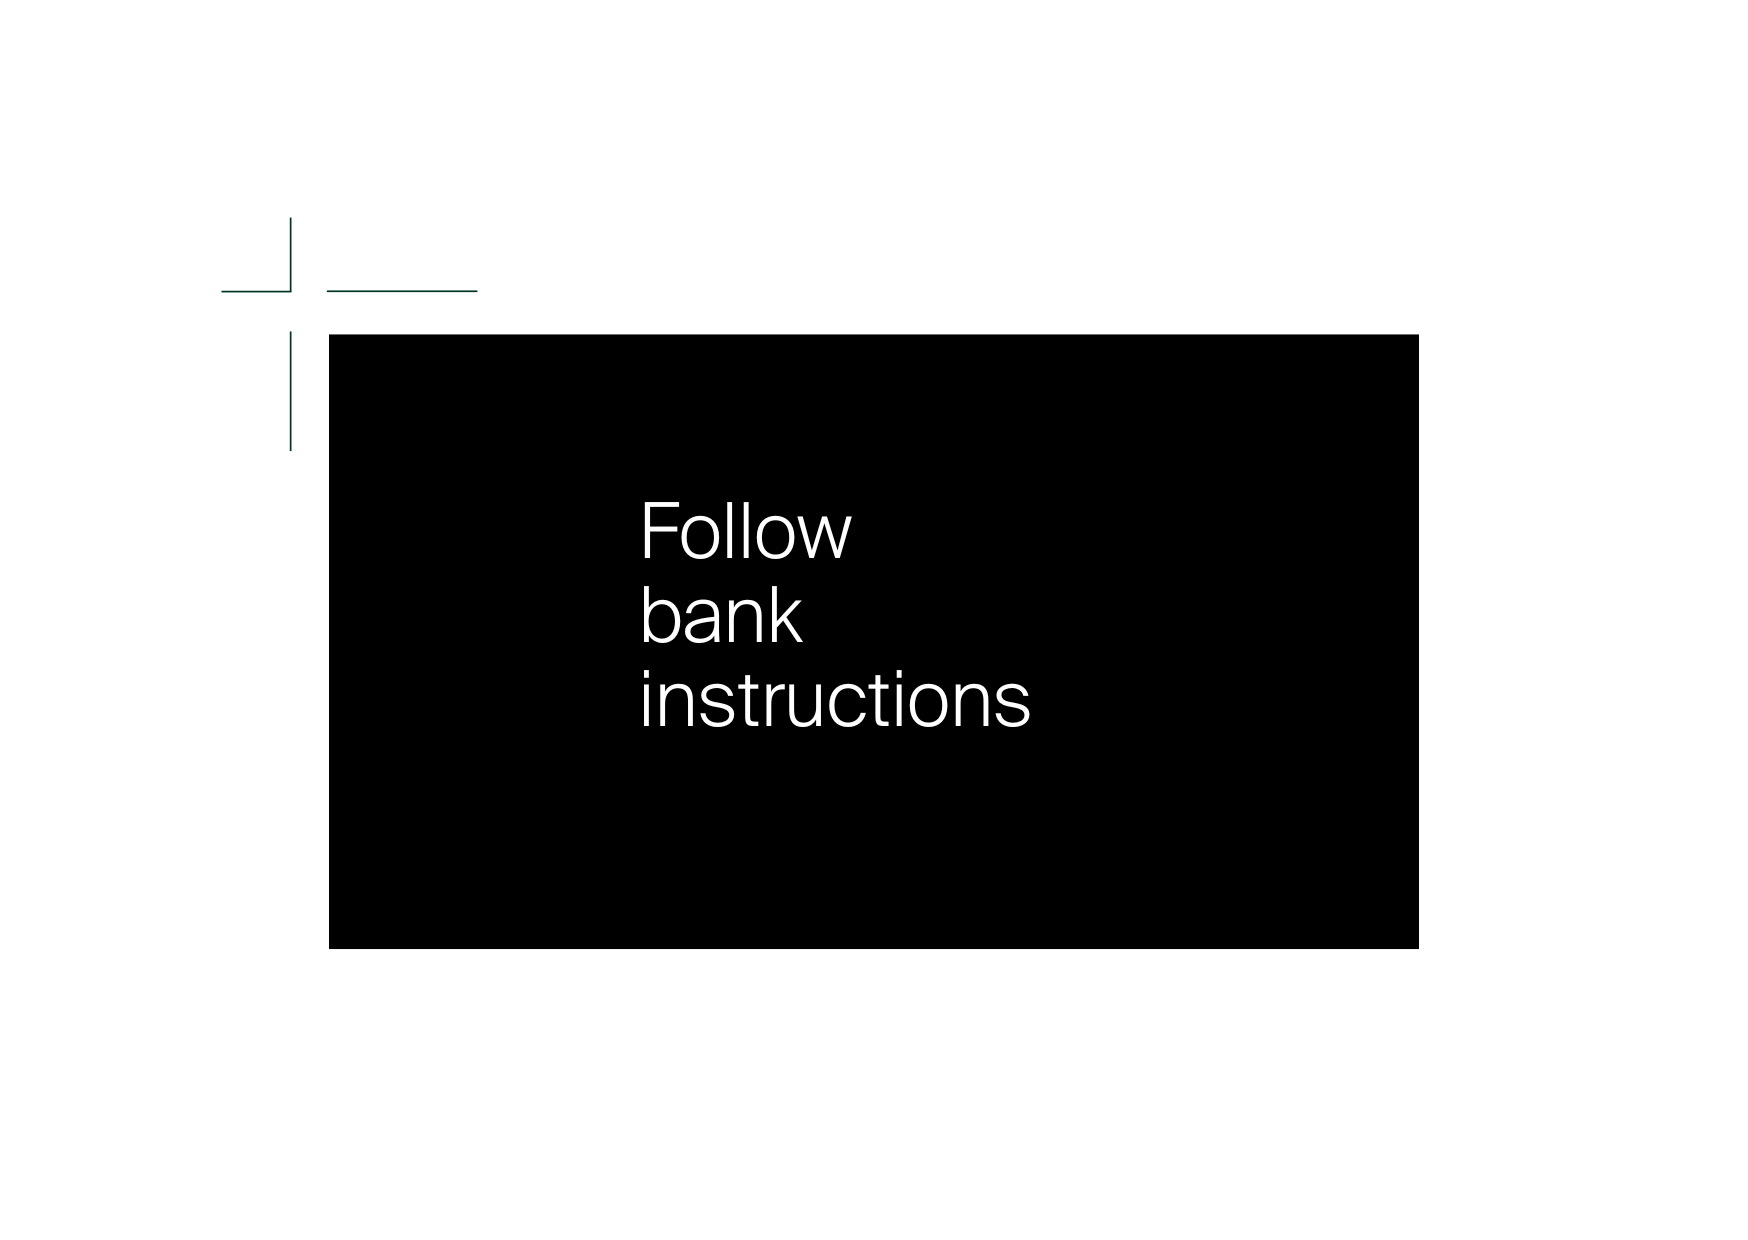 Follow bank instructions